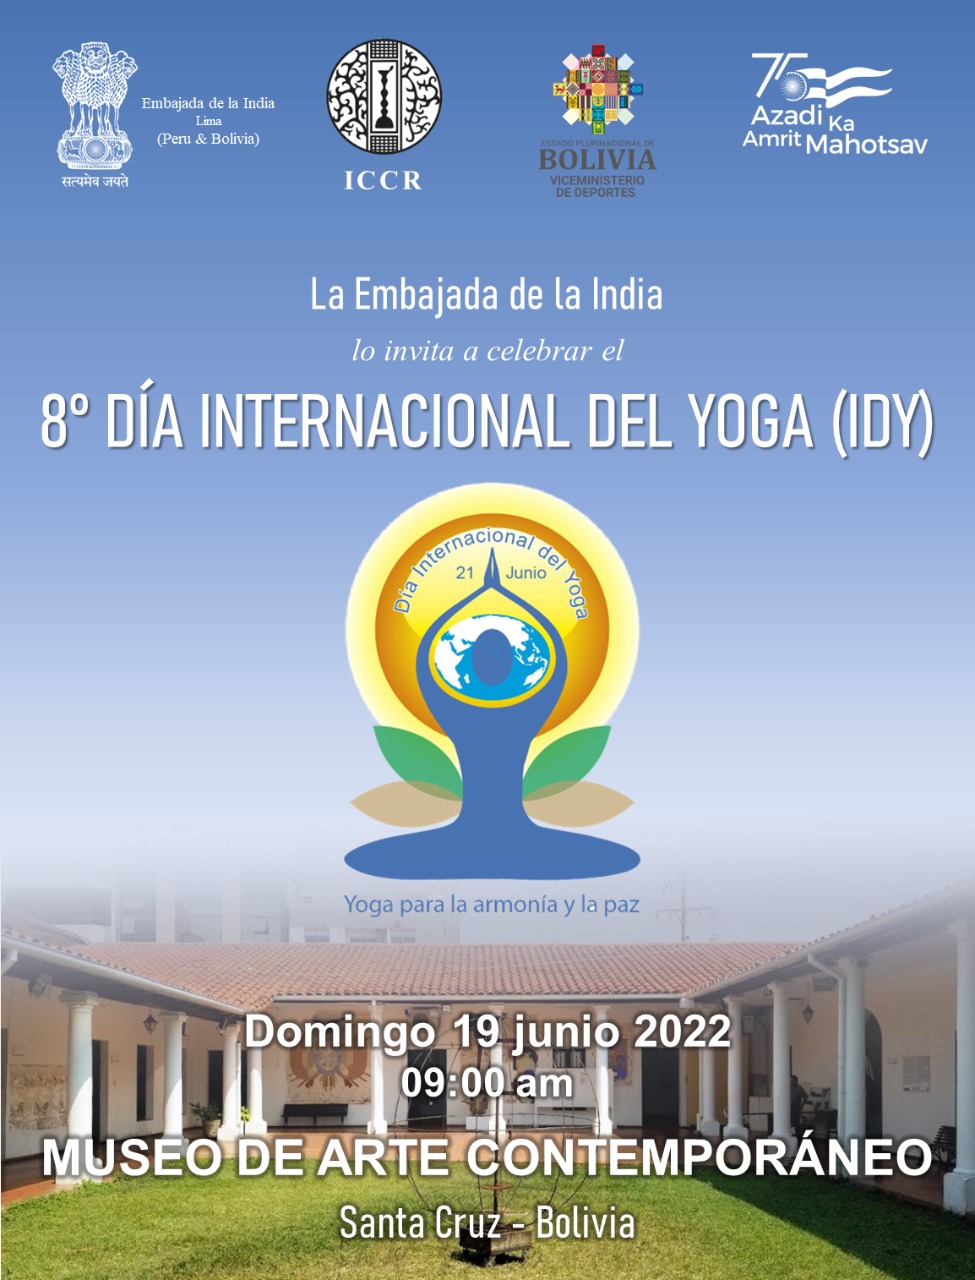 Celebration of 8th International Day of Yoga 2022 - Yoga event organised in Santacruz, Bolivia